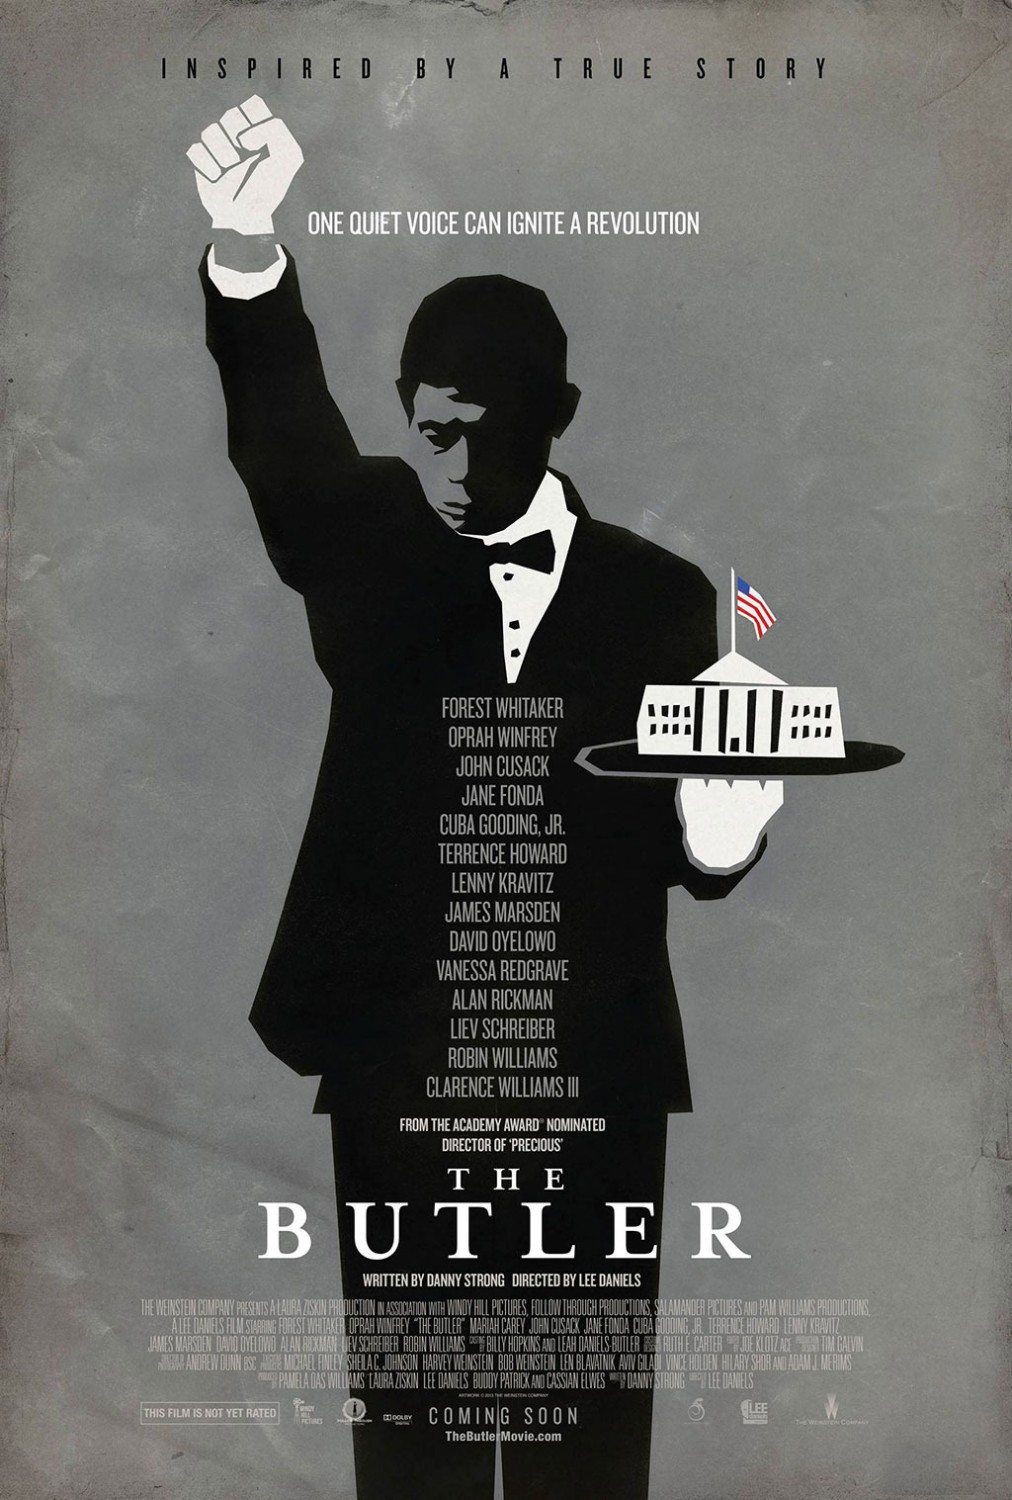 black butler movie poster